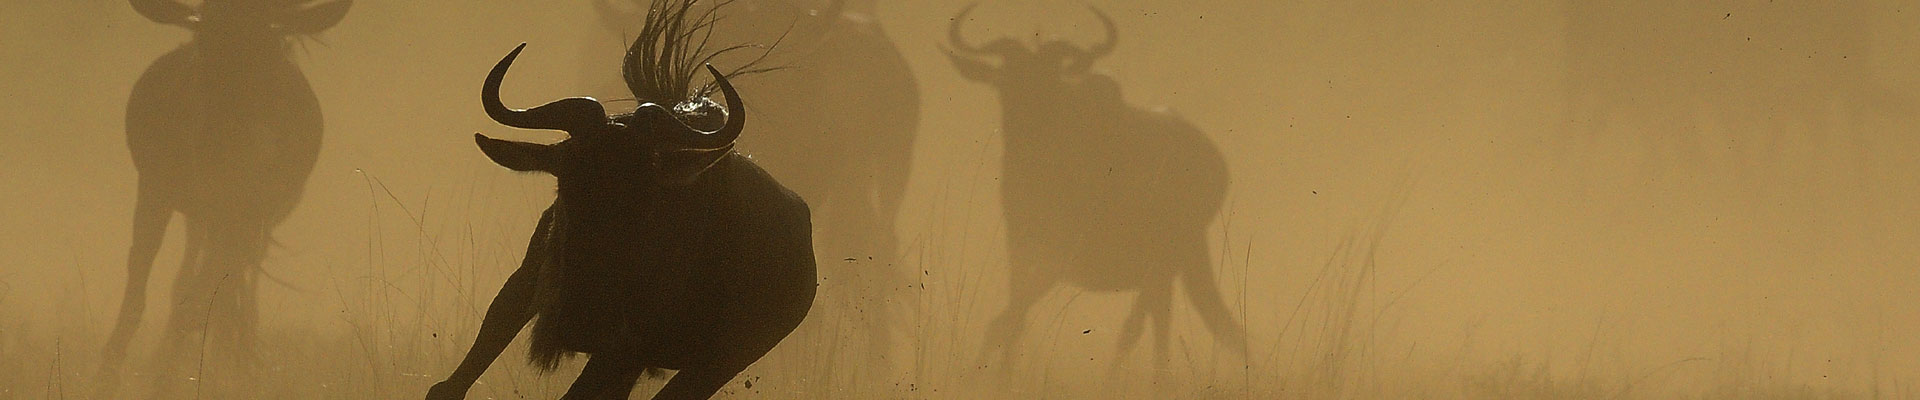 Wildebeest by Paul McDougall